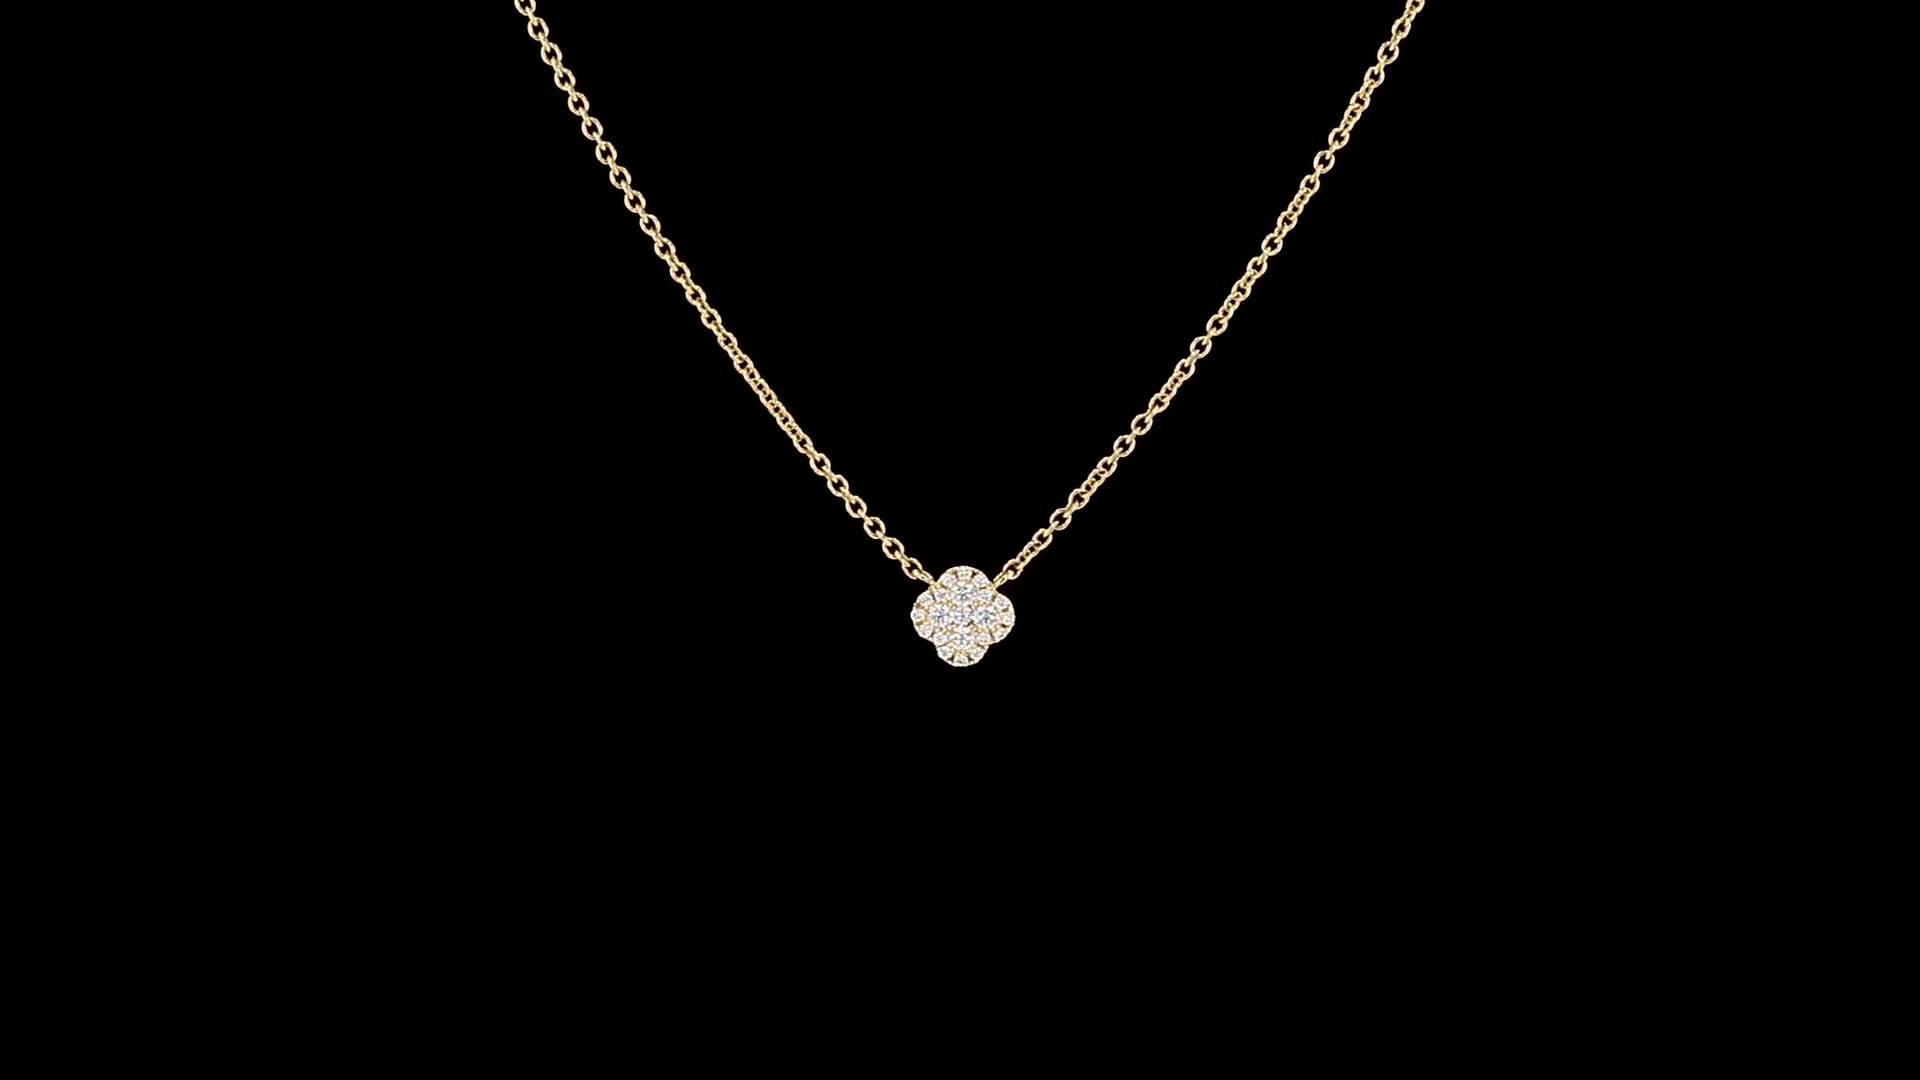 Pave diamond clover necklace